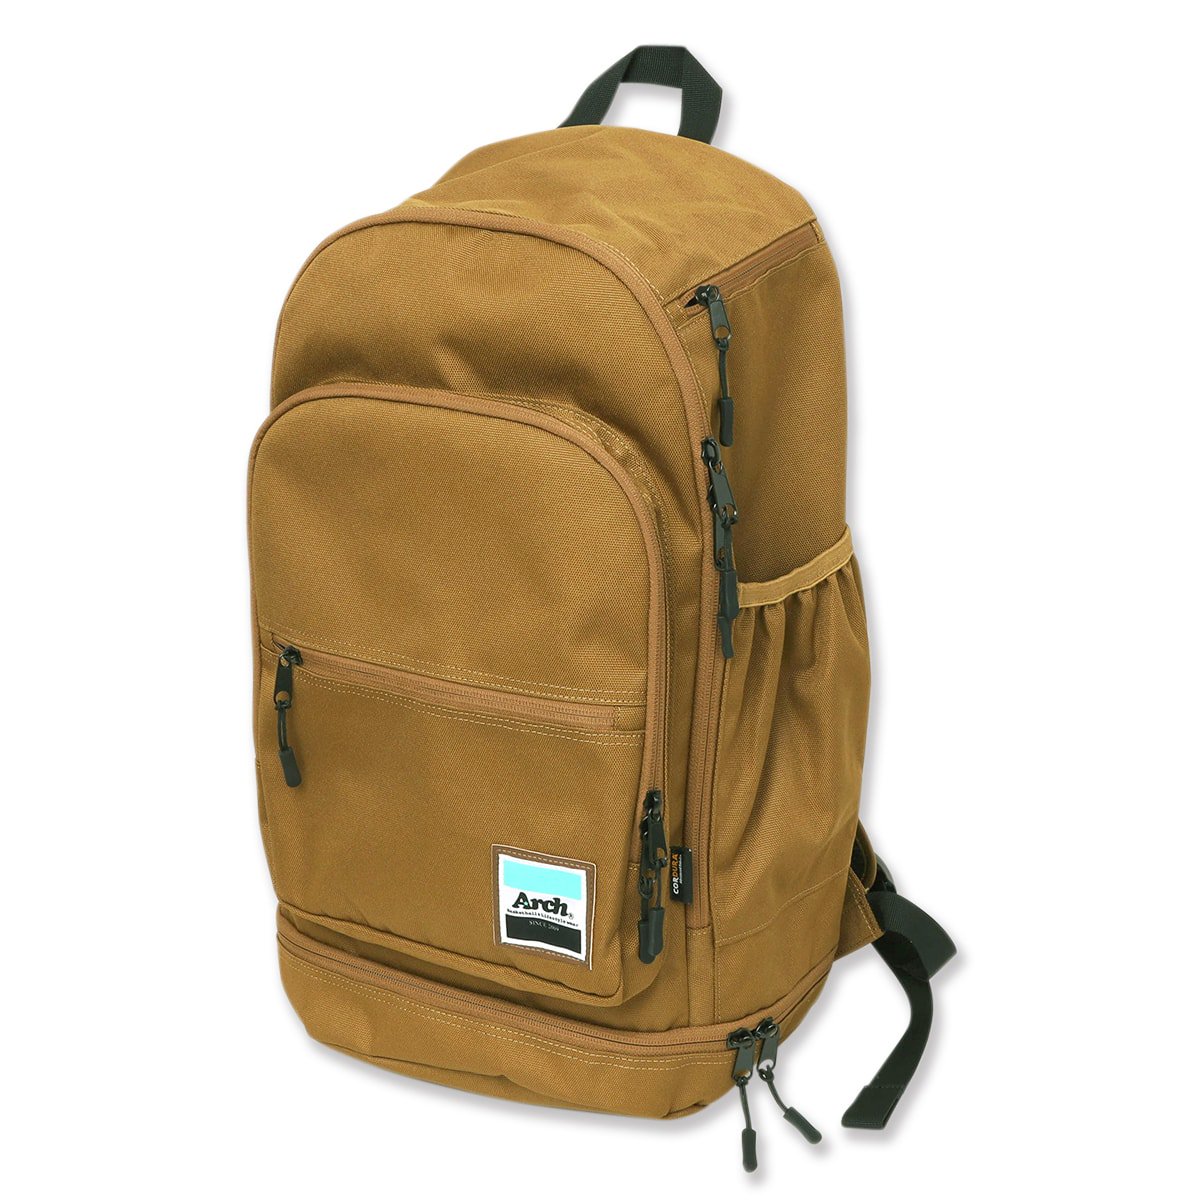 workout backpack 2.0【oak brown/purple】 - Arch ☆ アーチ 